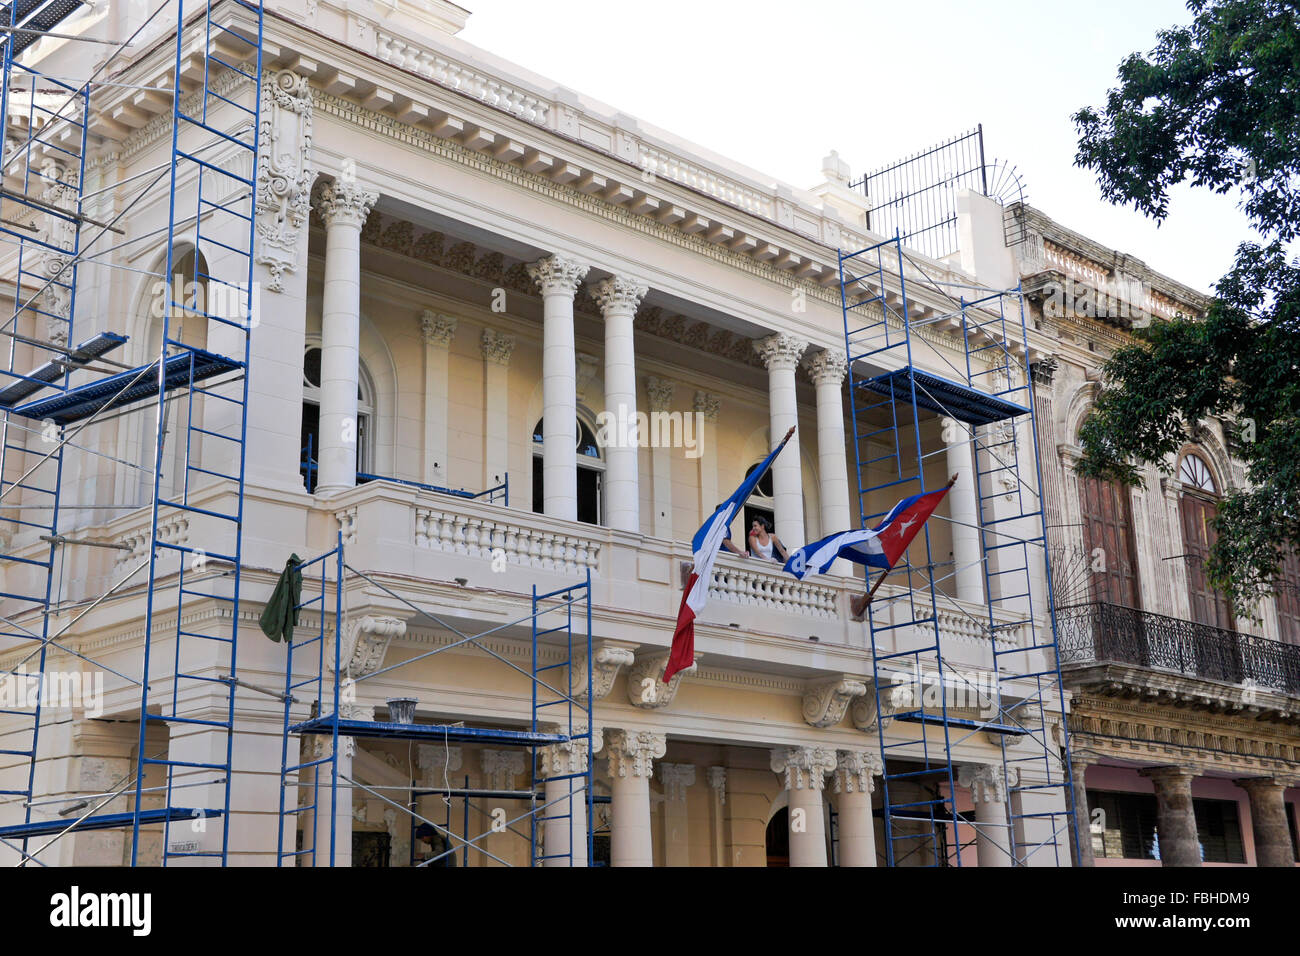 Schönes altes Herrenhaus im Umbau, Havanna, Kuba Stockfoto